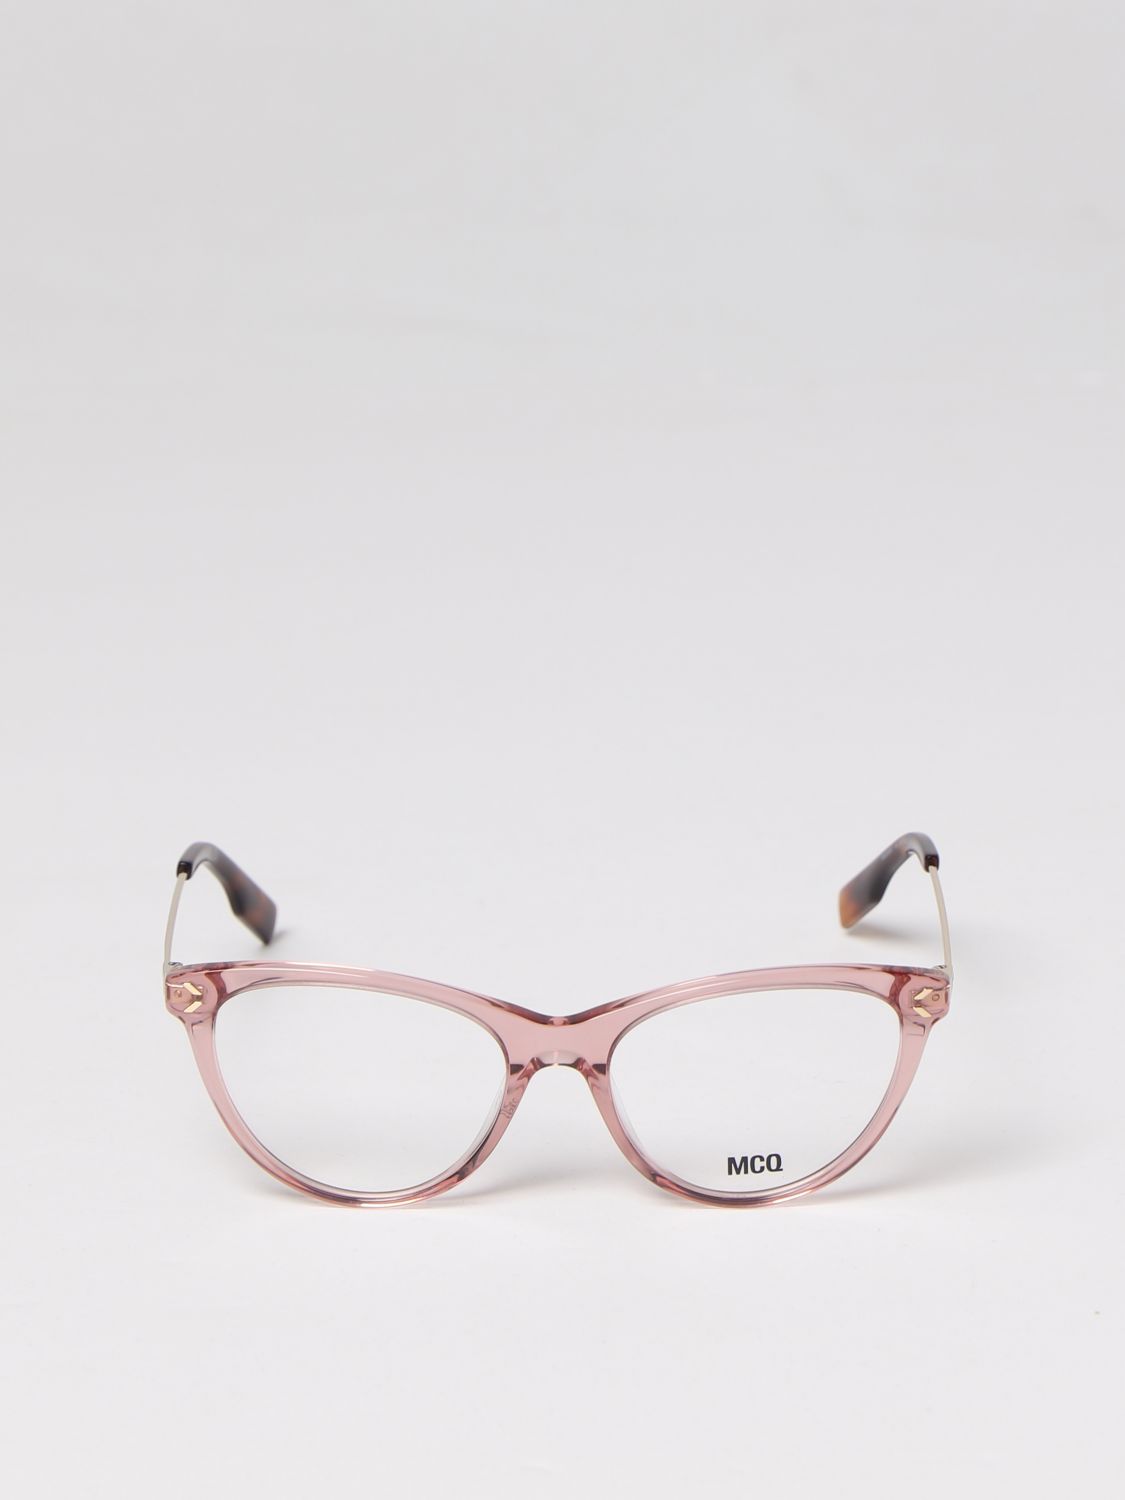 Optical frames Mcq: Mcq optical frames for woman pink 2